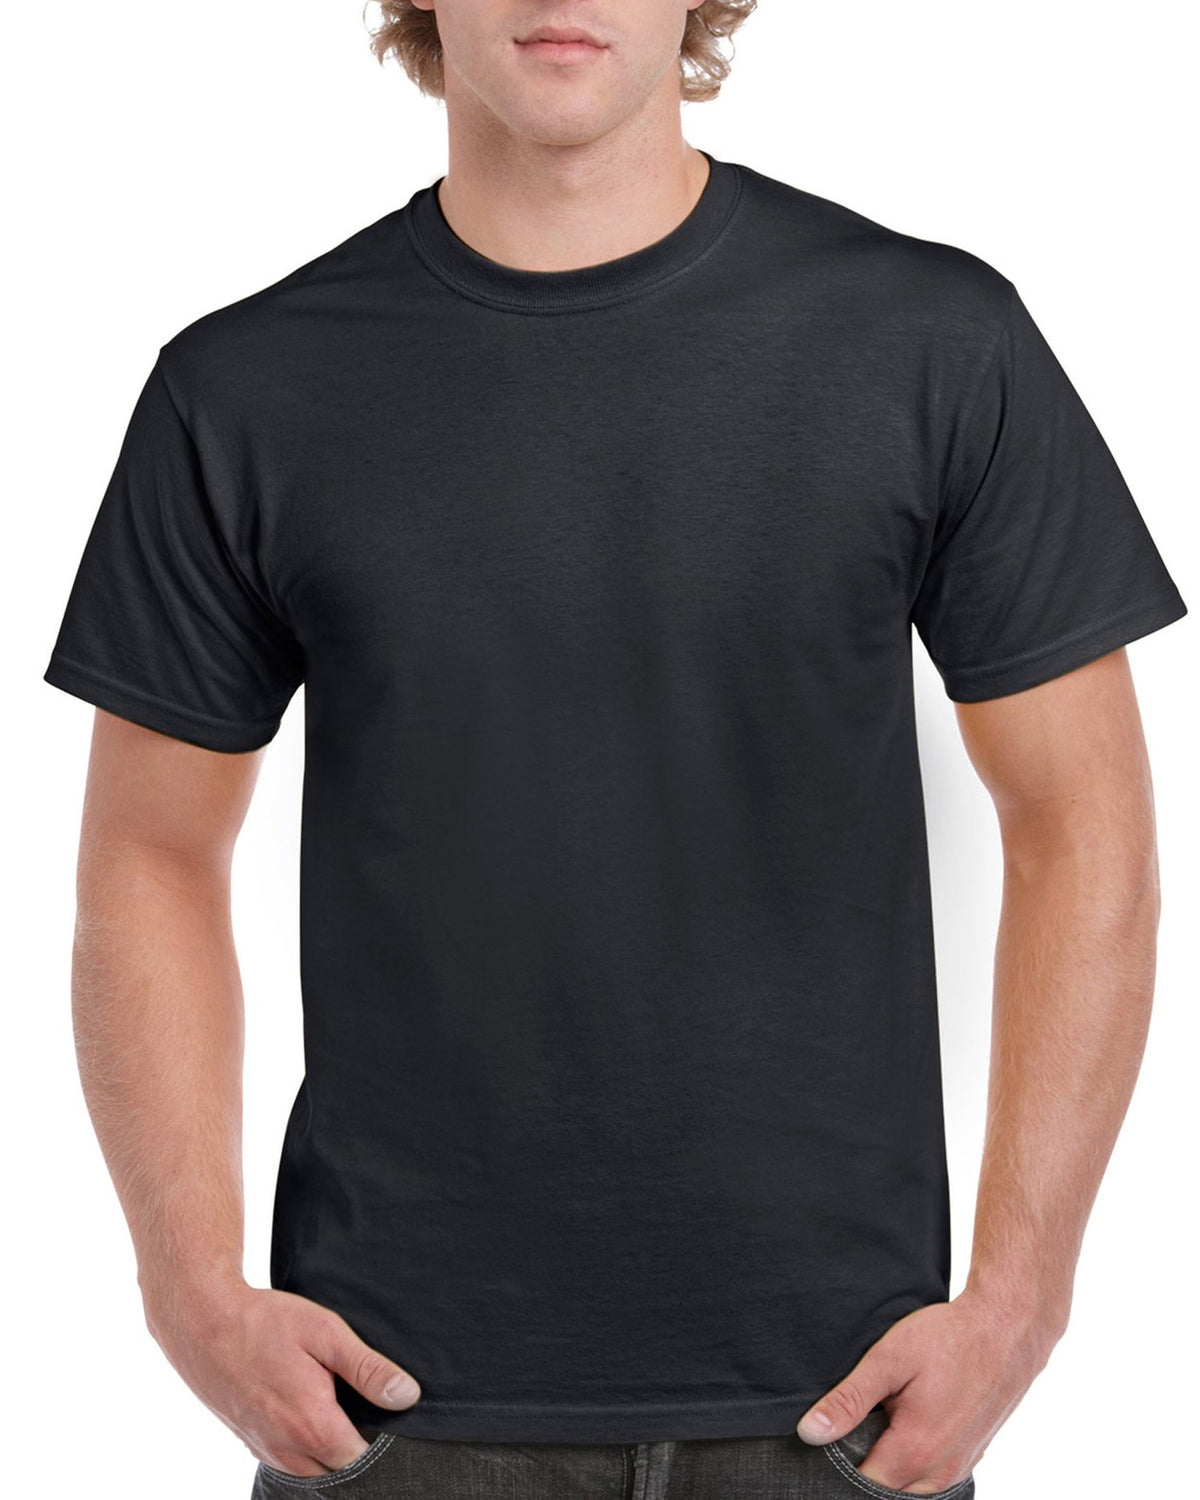 Gildan Heavy Cotton G5000 Adult T-Shirt (S-M-L-XL)